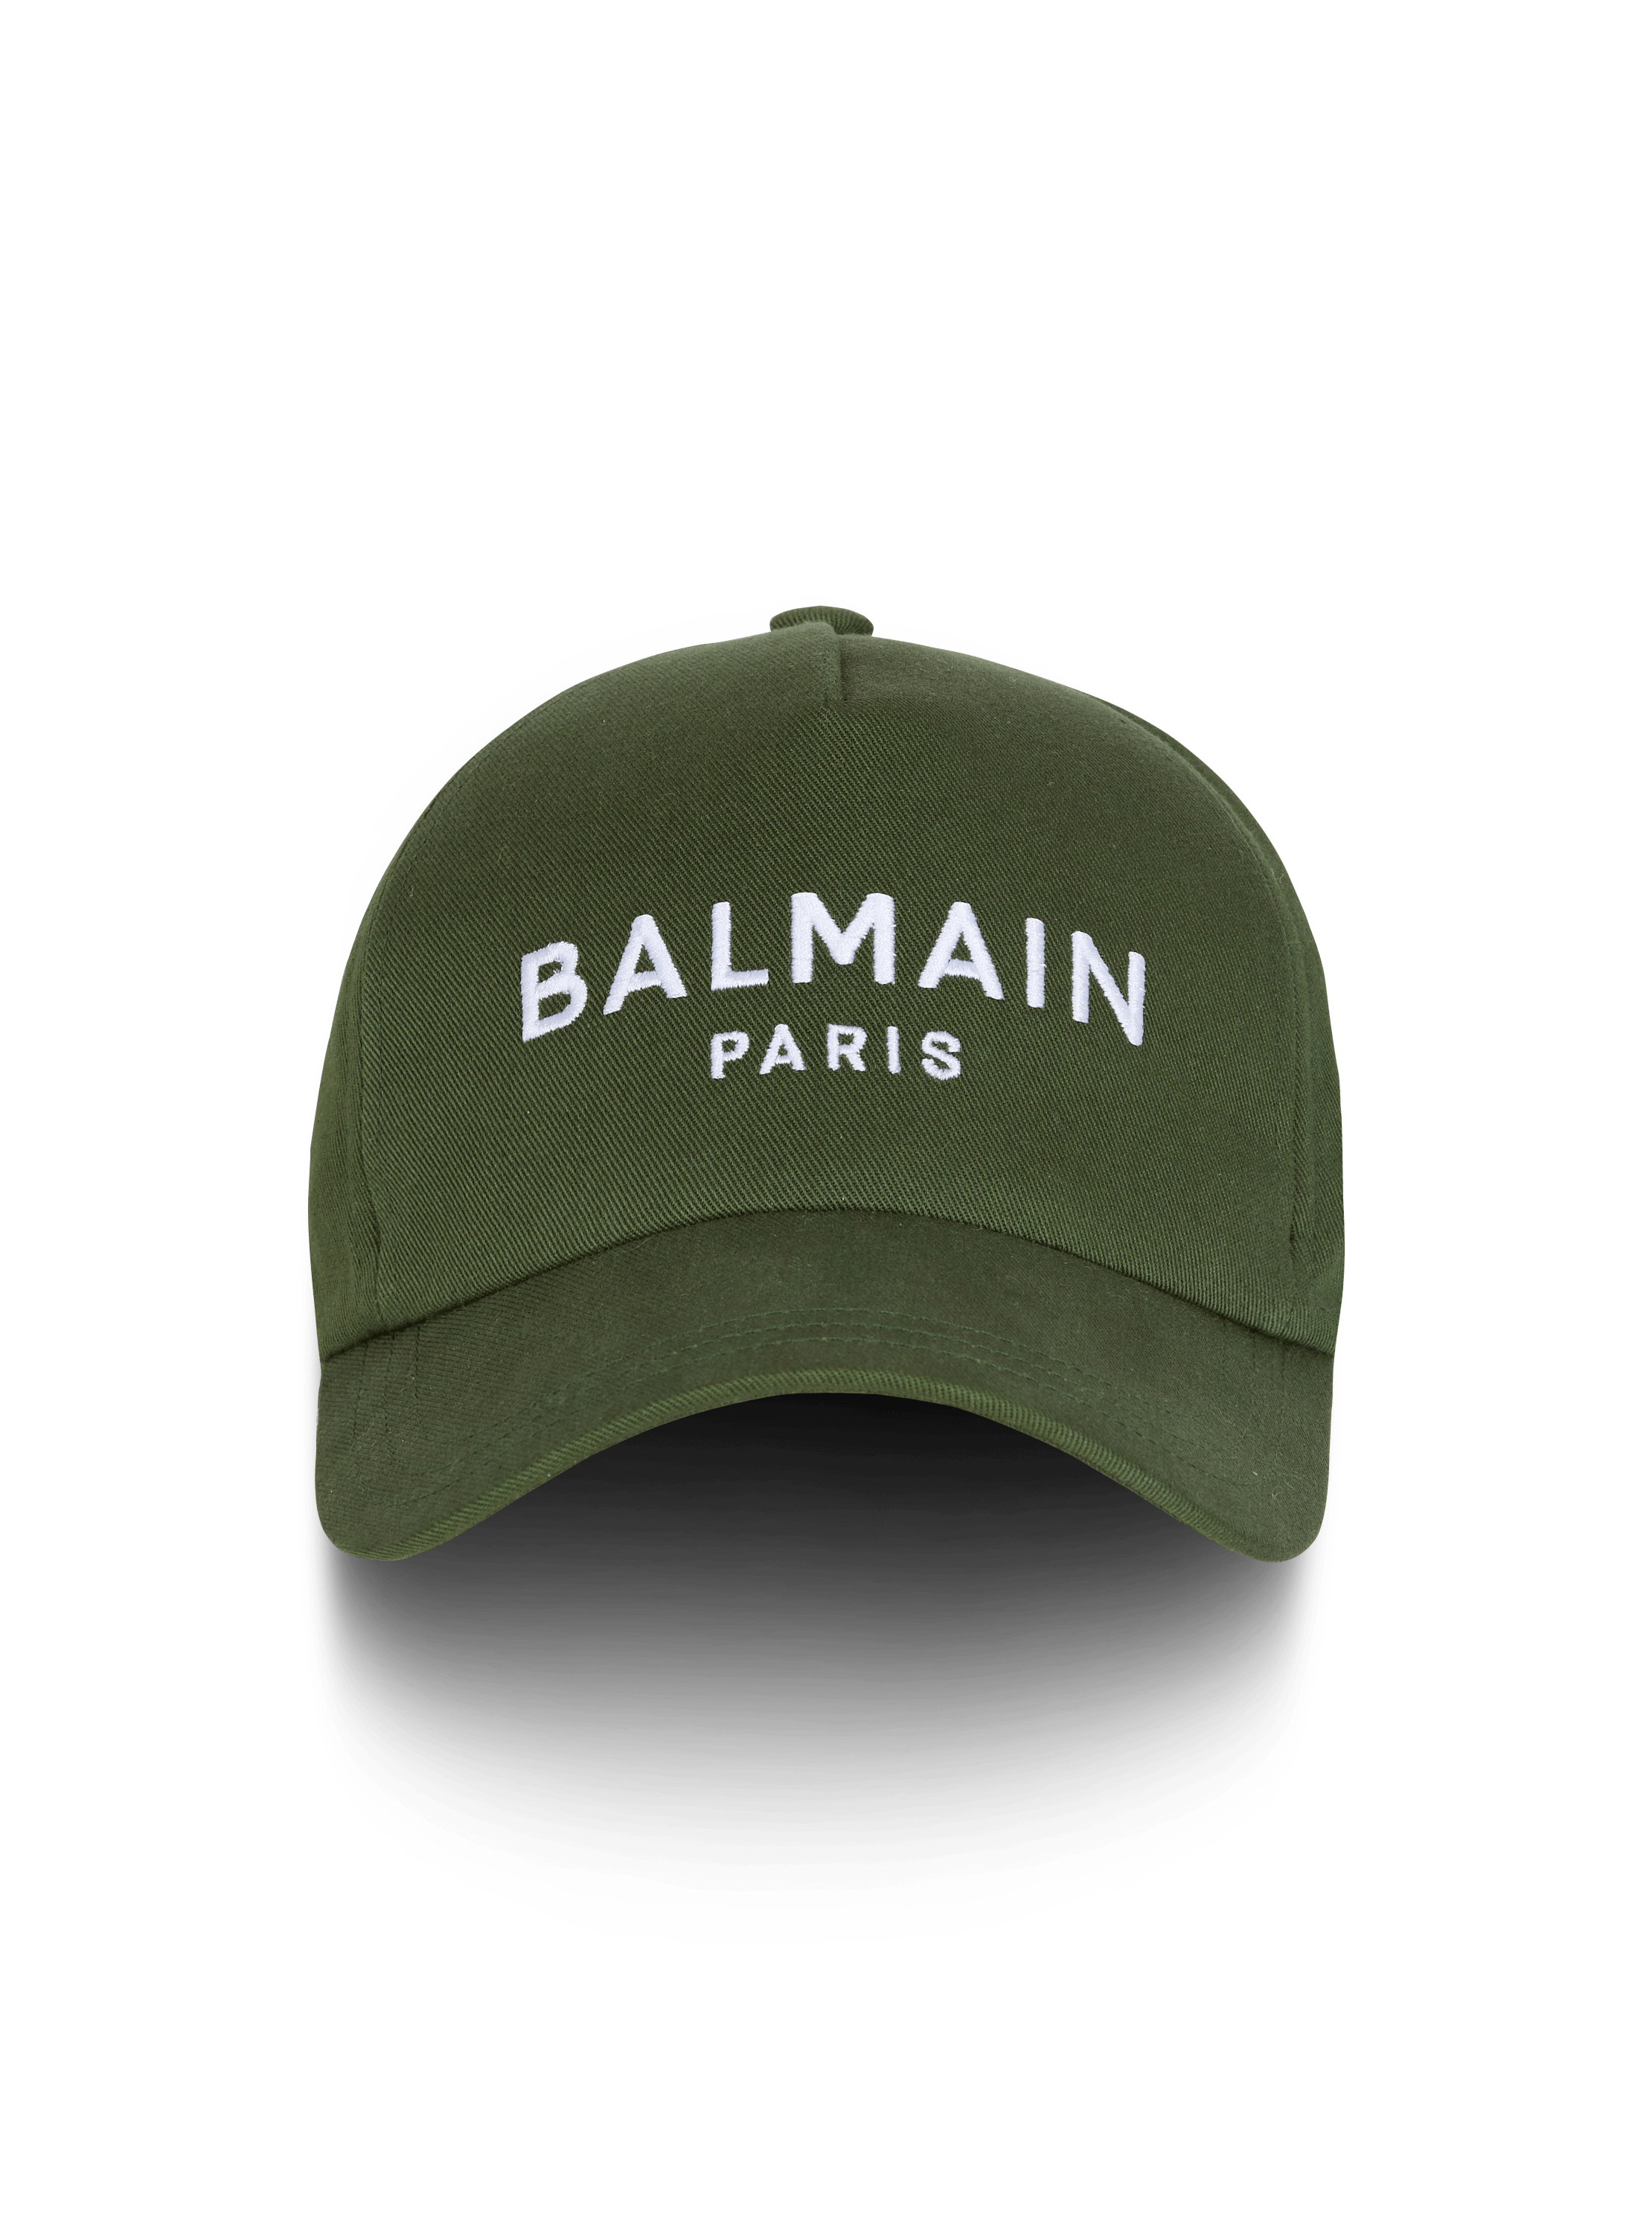 Cotton cap with Balmain Paris embroidery